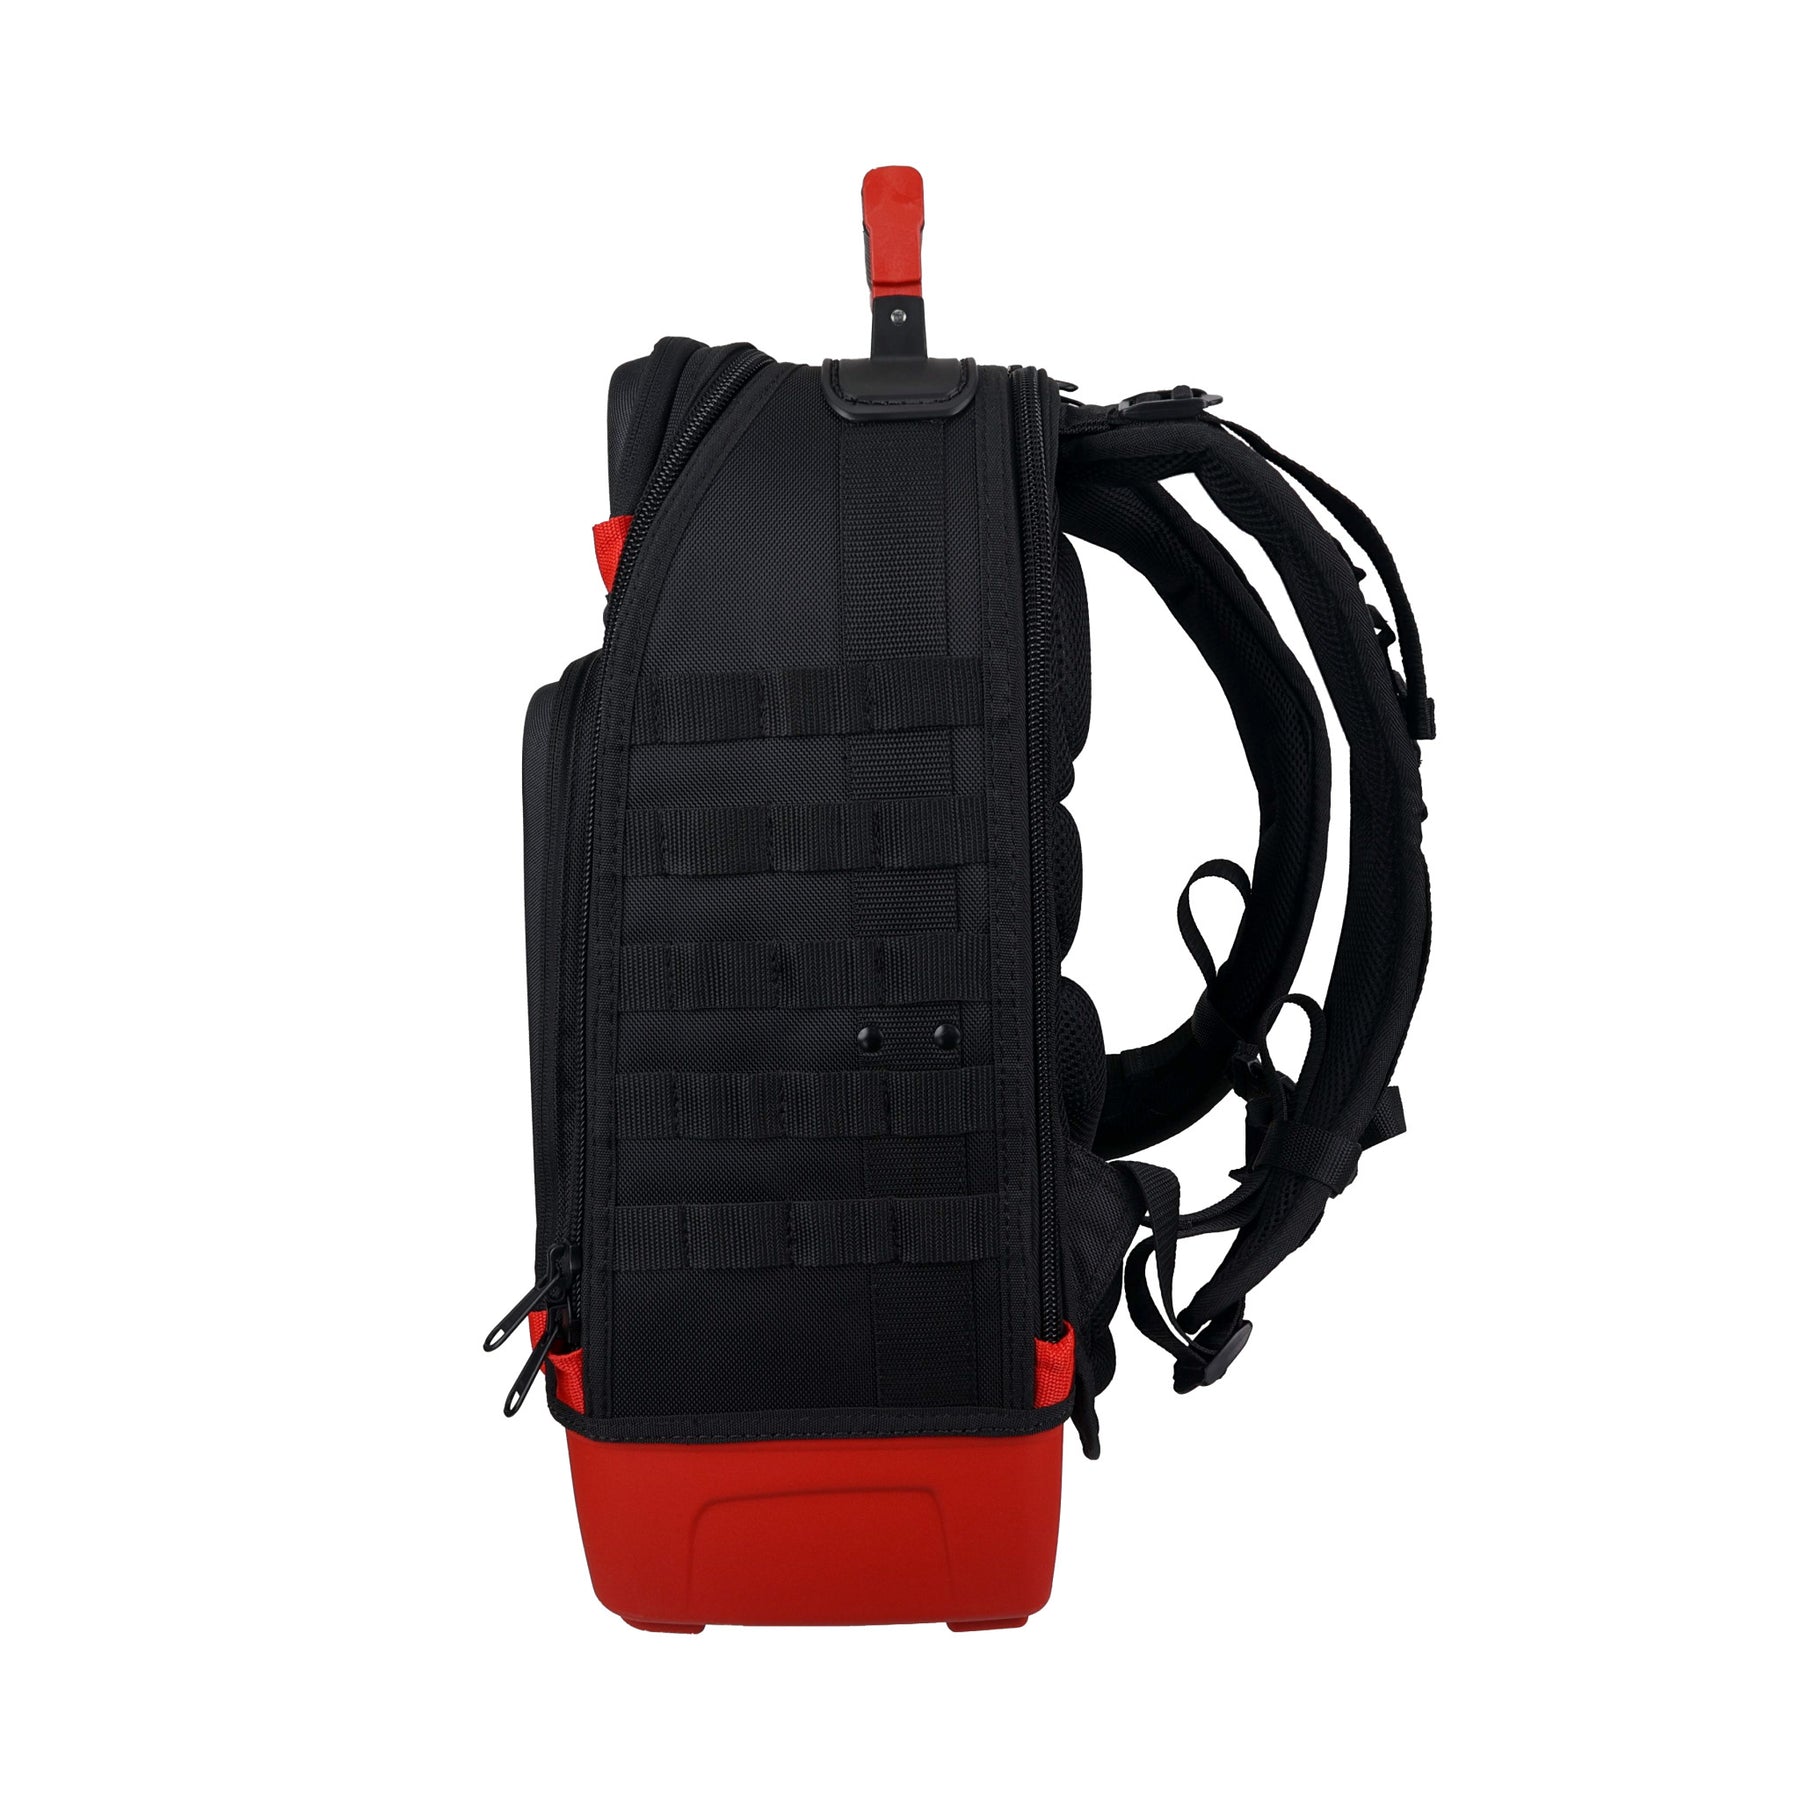 Heavy Duty Tool Hauler Backpack